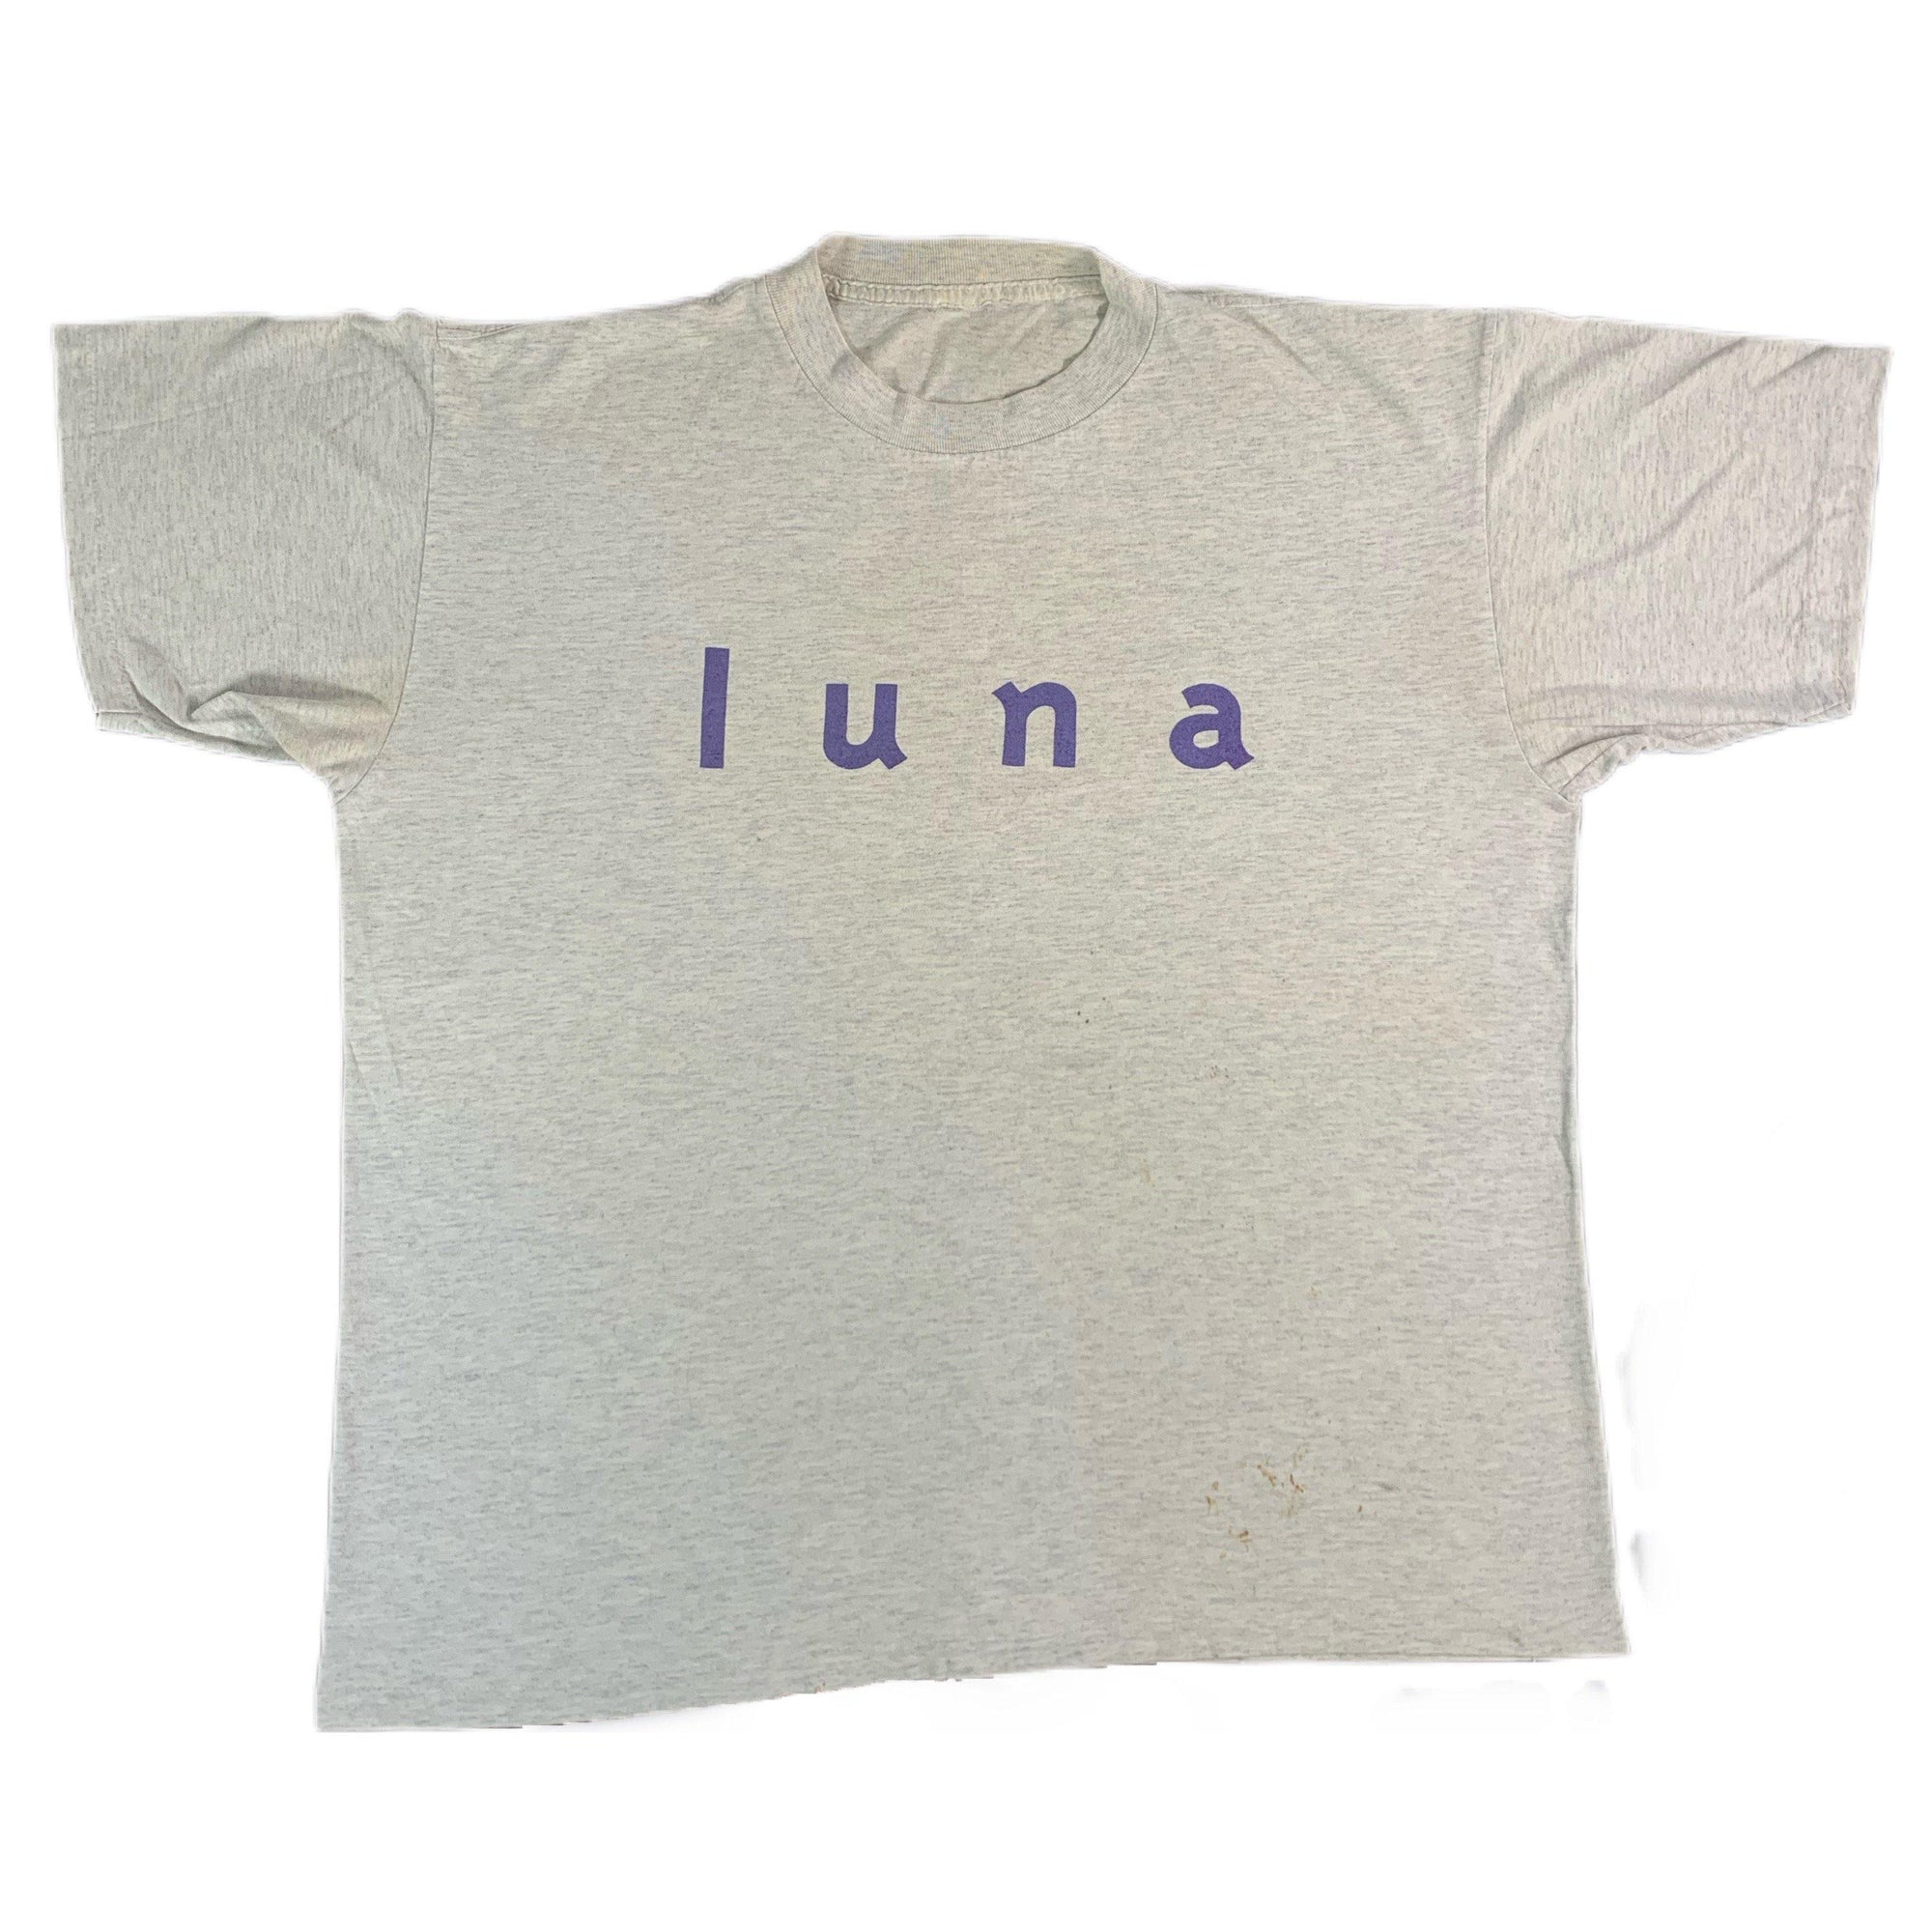 Vintage Luna "2" T-Shirt - jointcustodydc